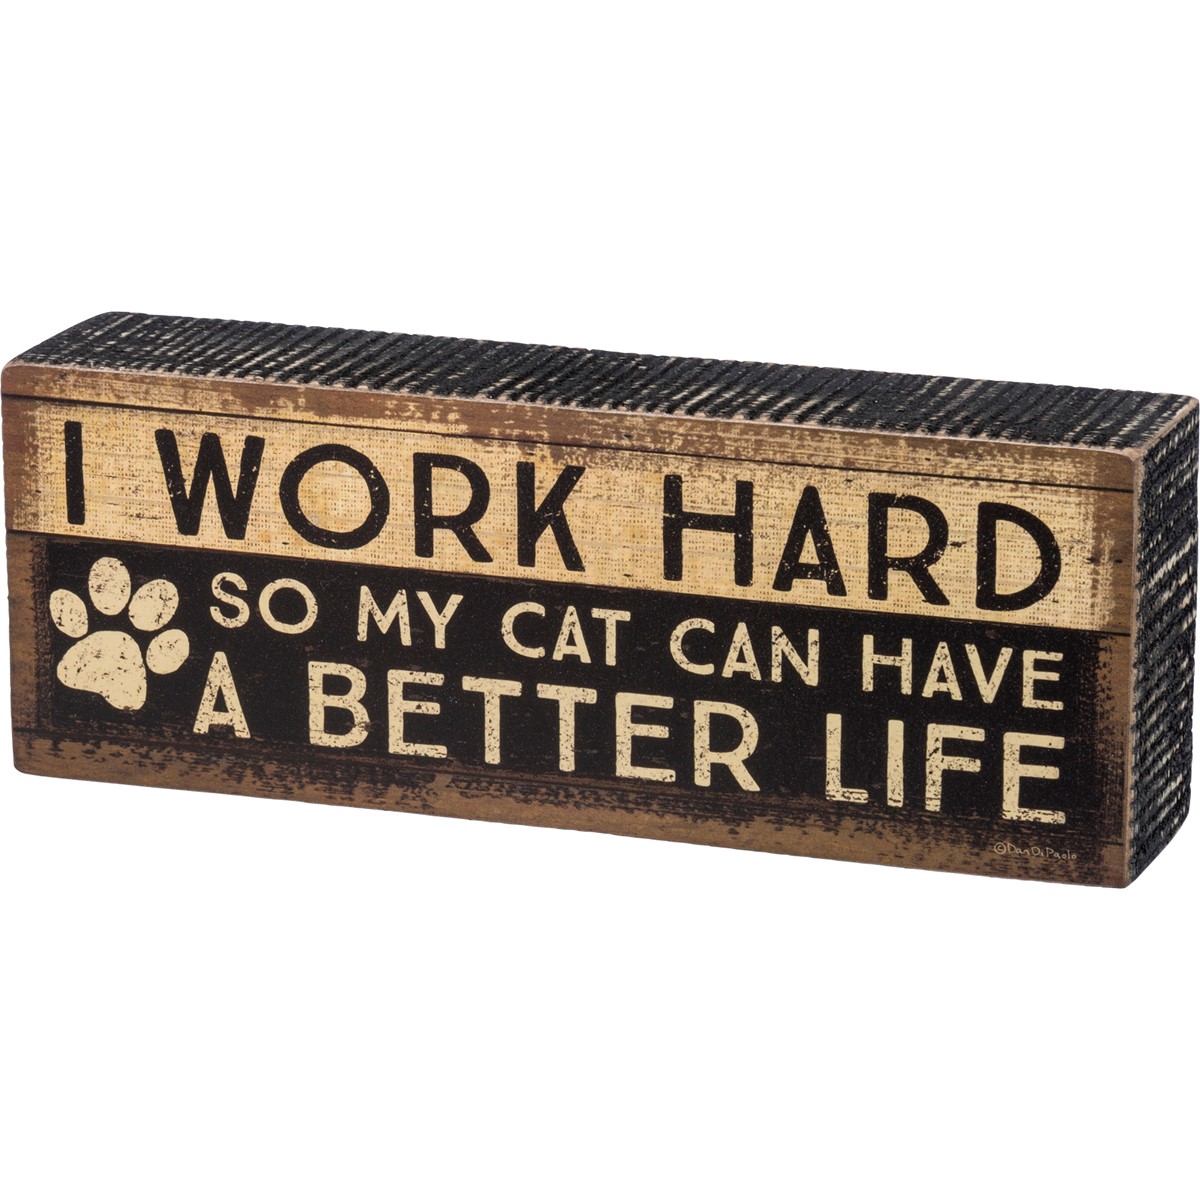 Cat Better Life Box Sign - Wood, Paper